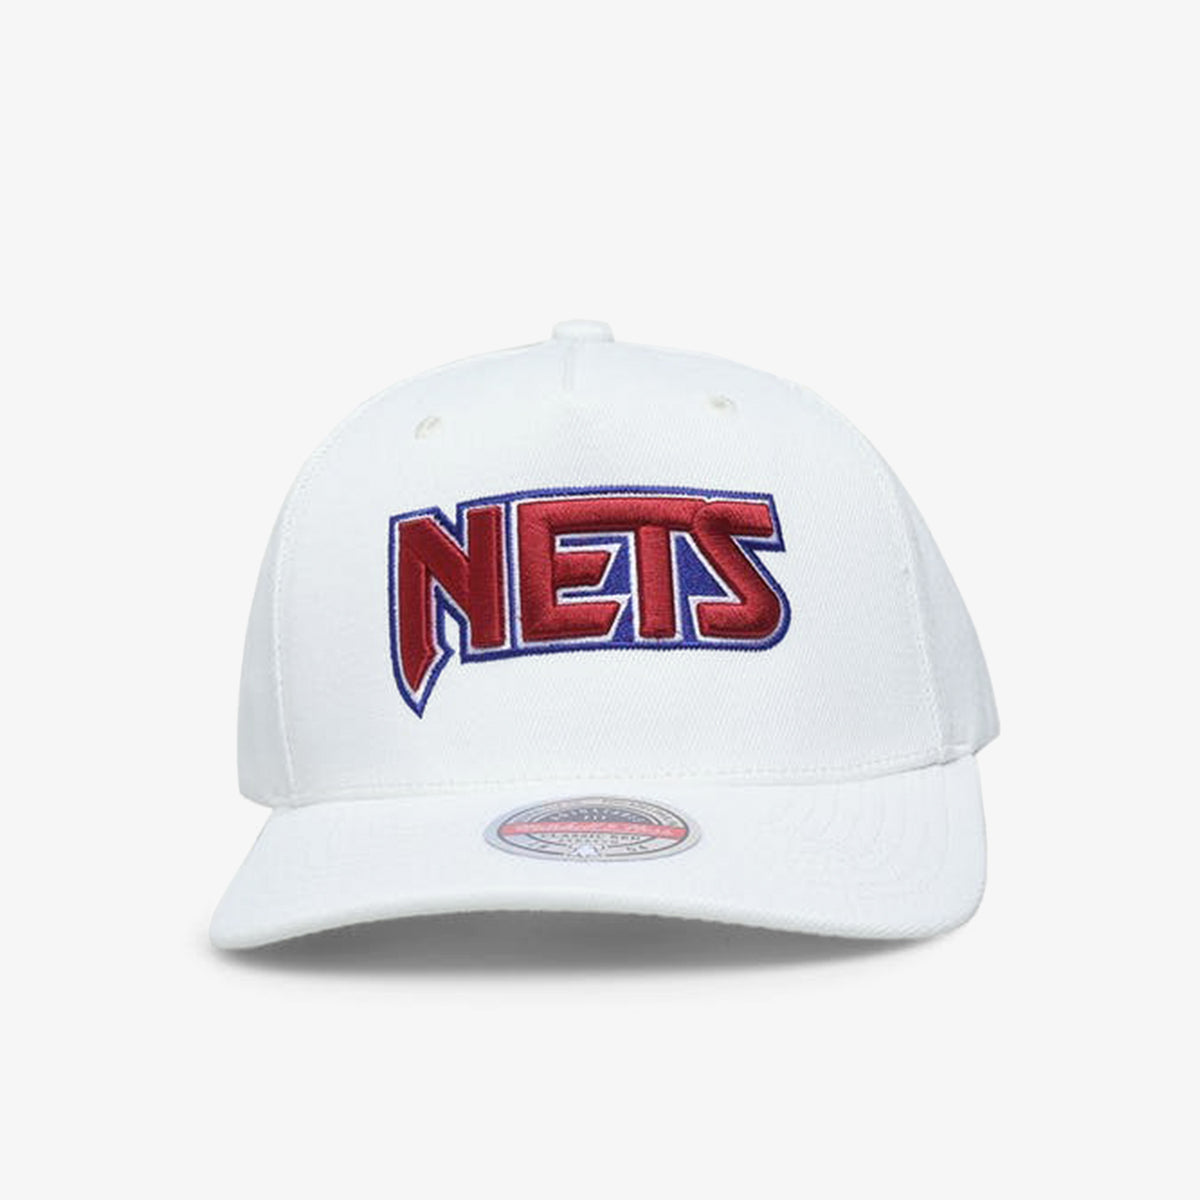 Brooklyn Nets Vintage White Classic Redline Snapback